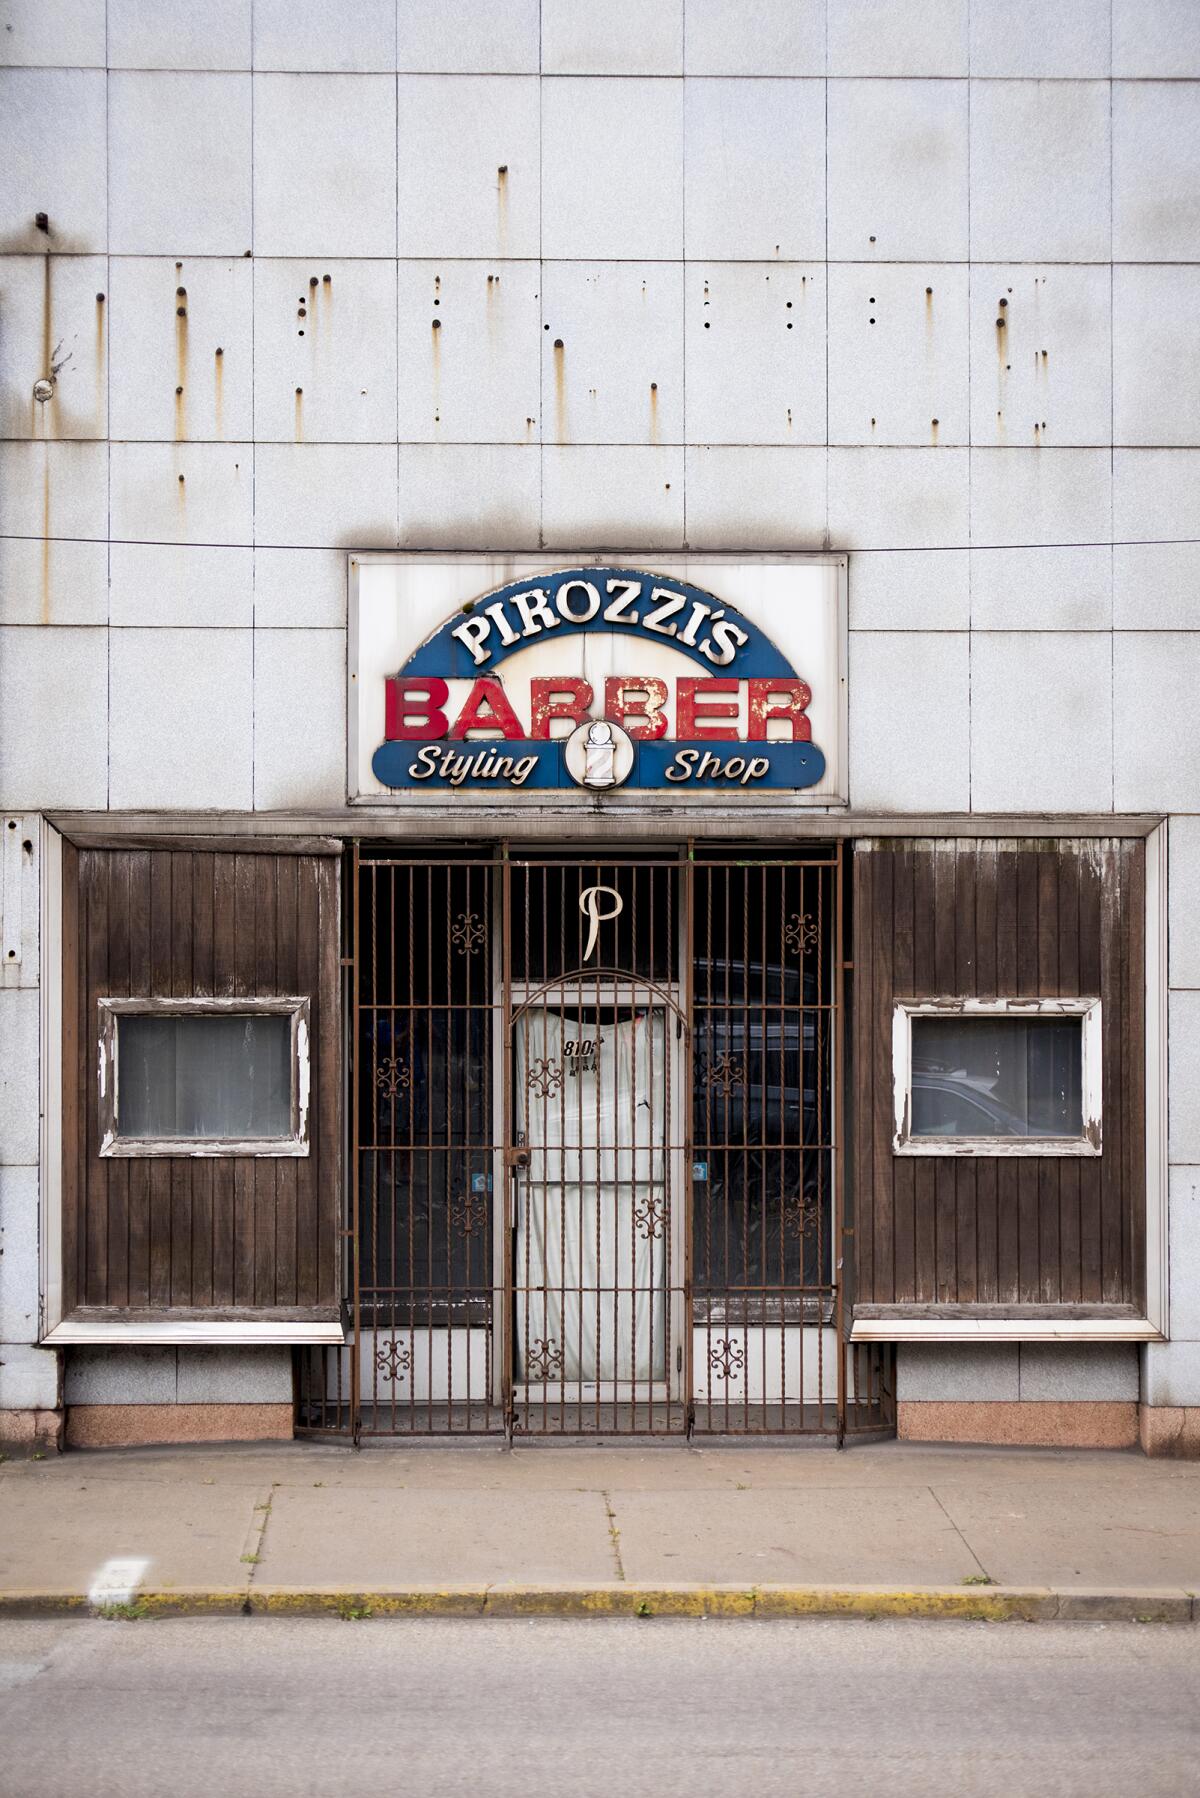 Pirozzi's Barbershop in Braddock, Penn.